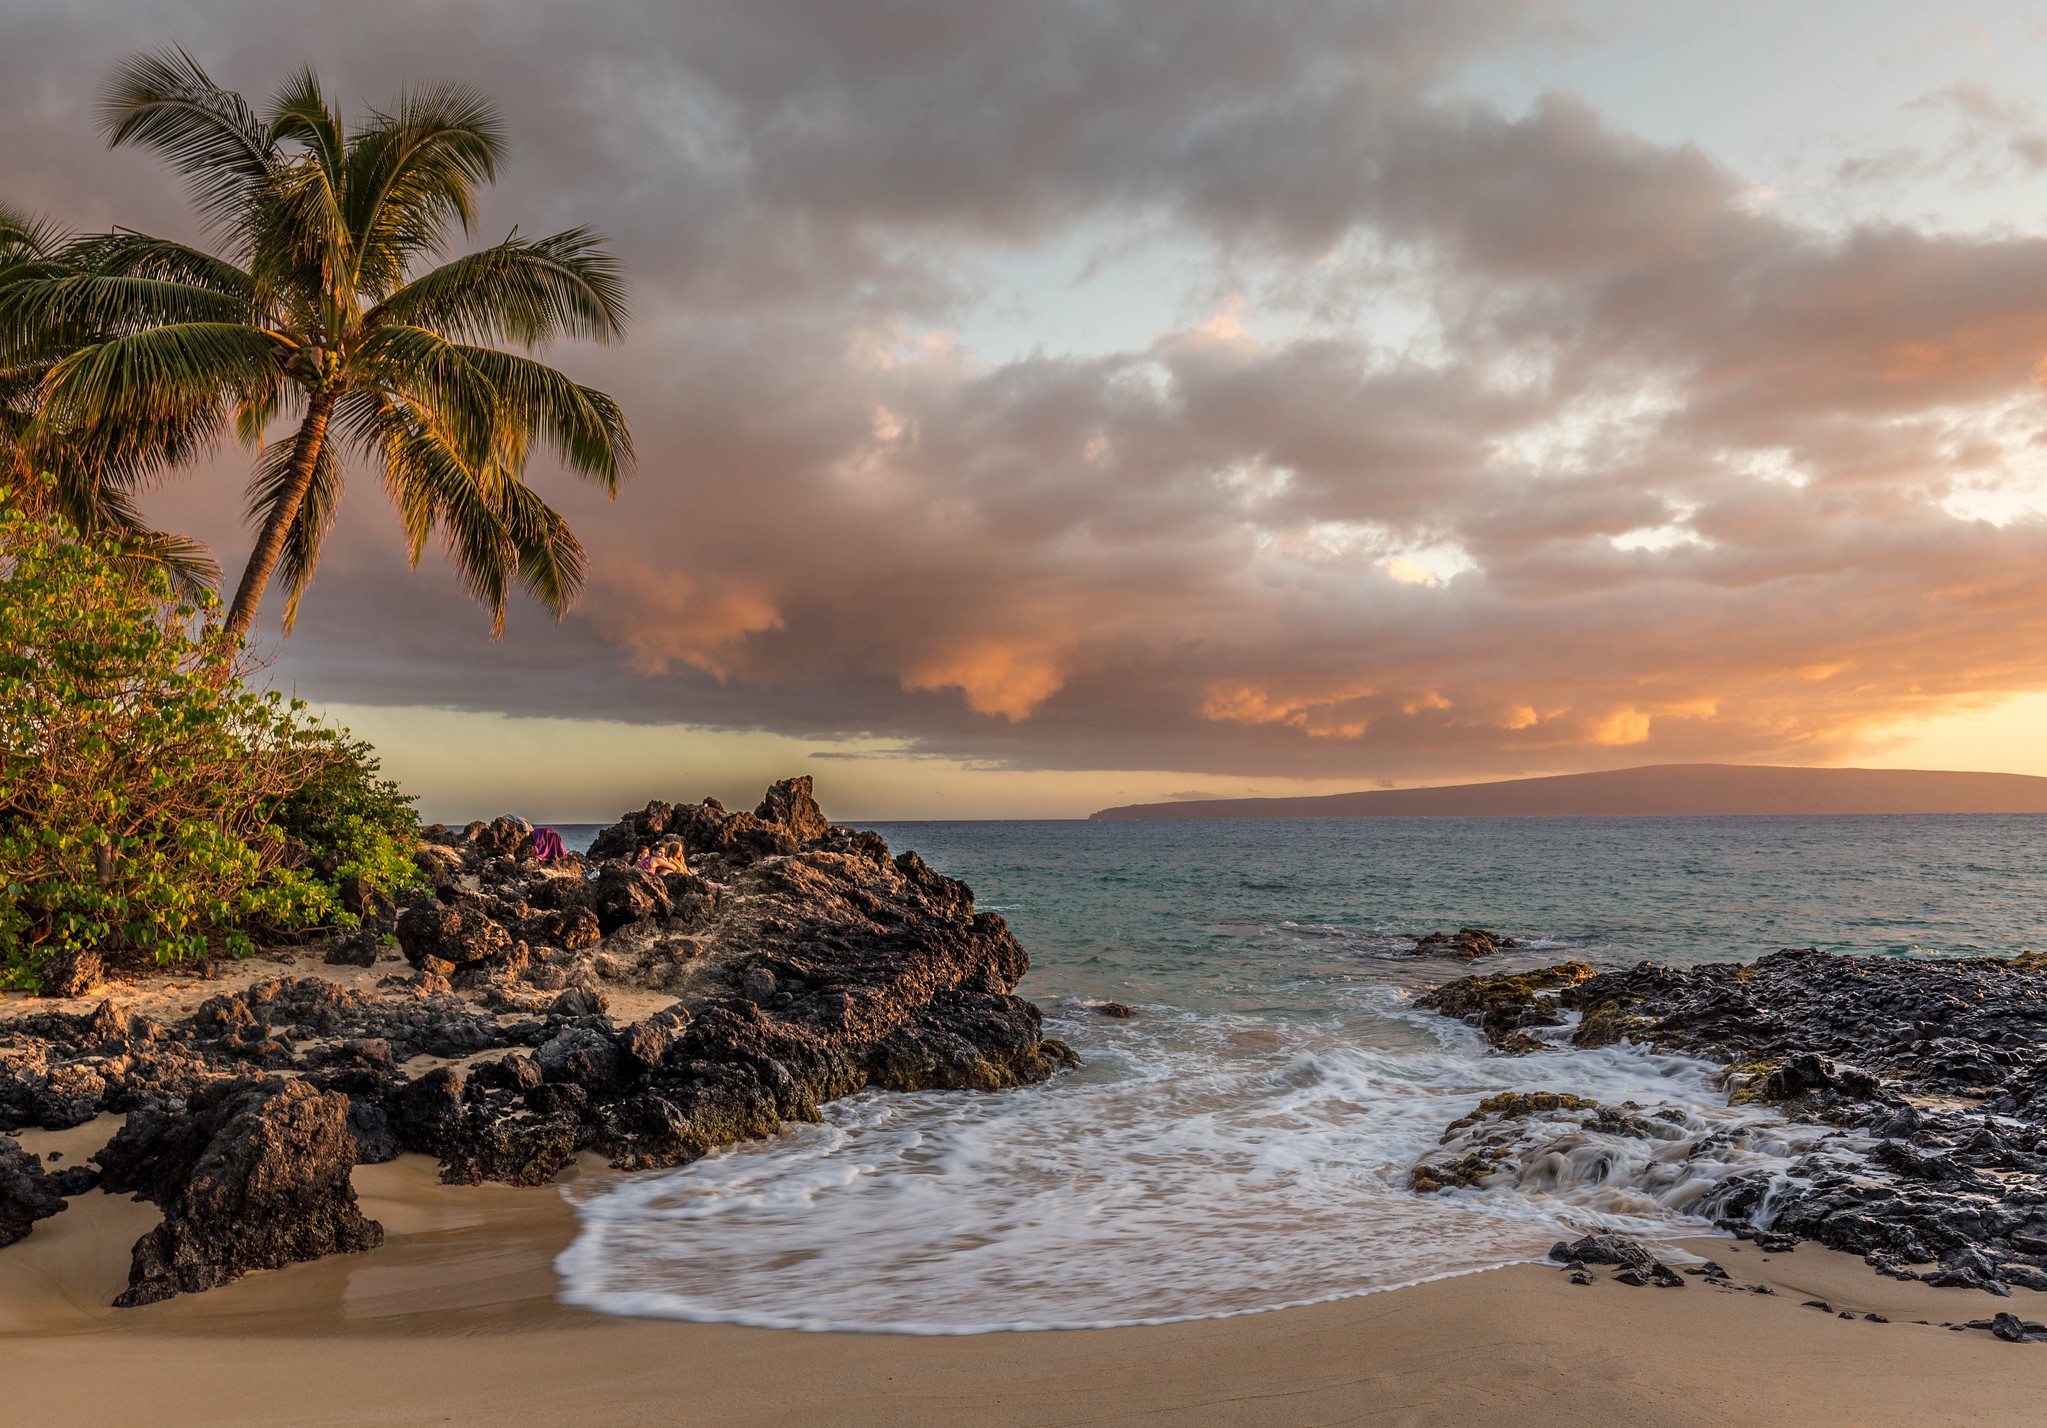 A beautiful view of a Hawaiian beach